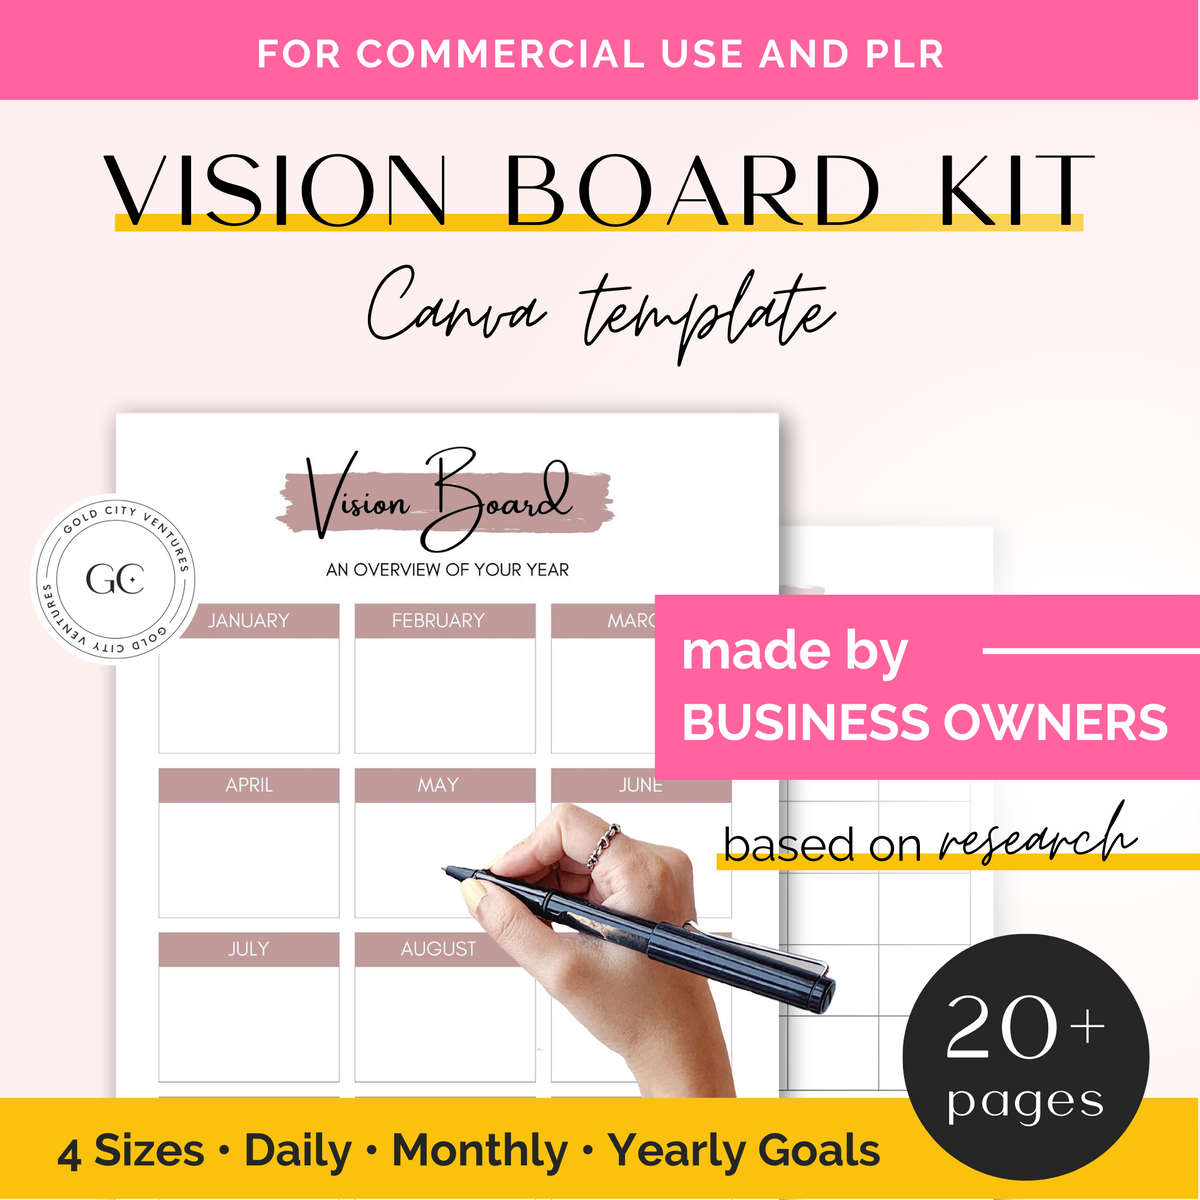 Vision Board Kit – Gold City Ventures